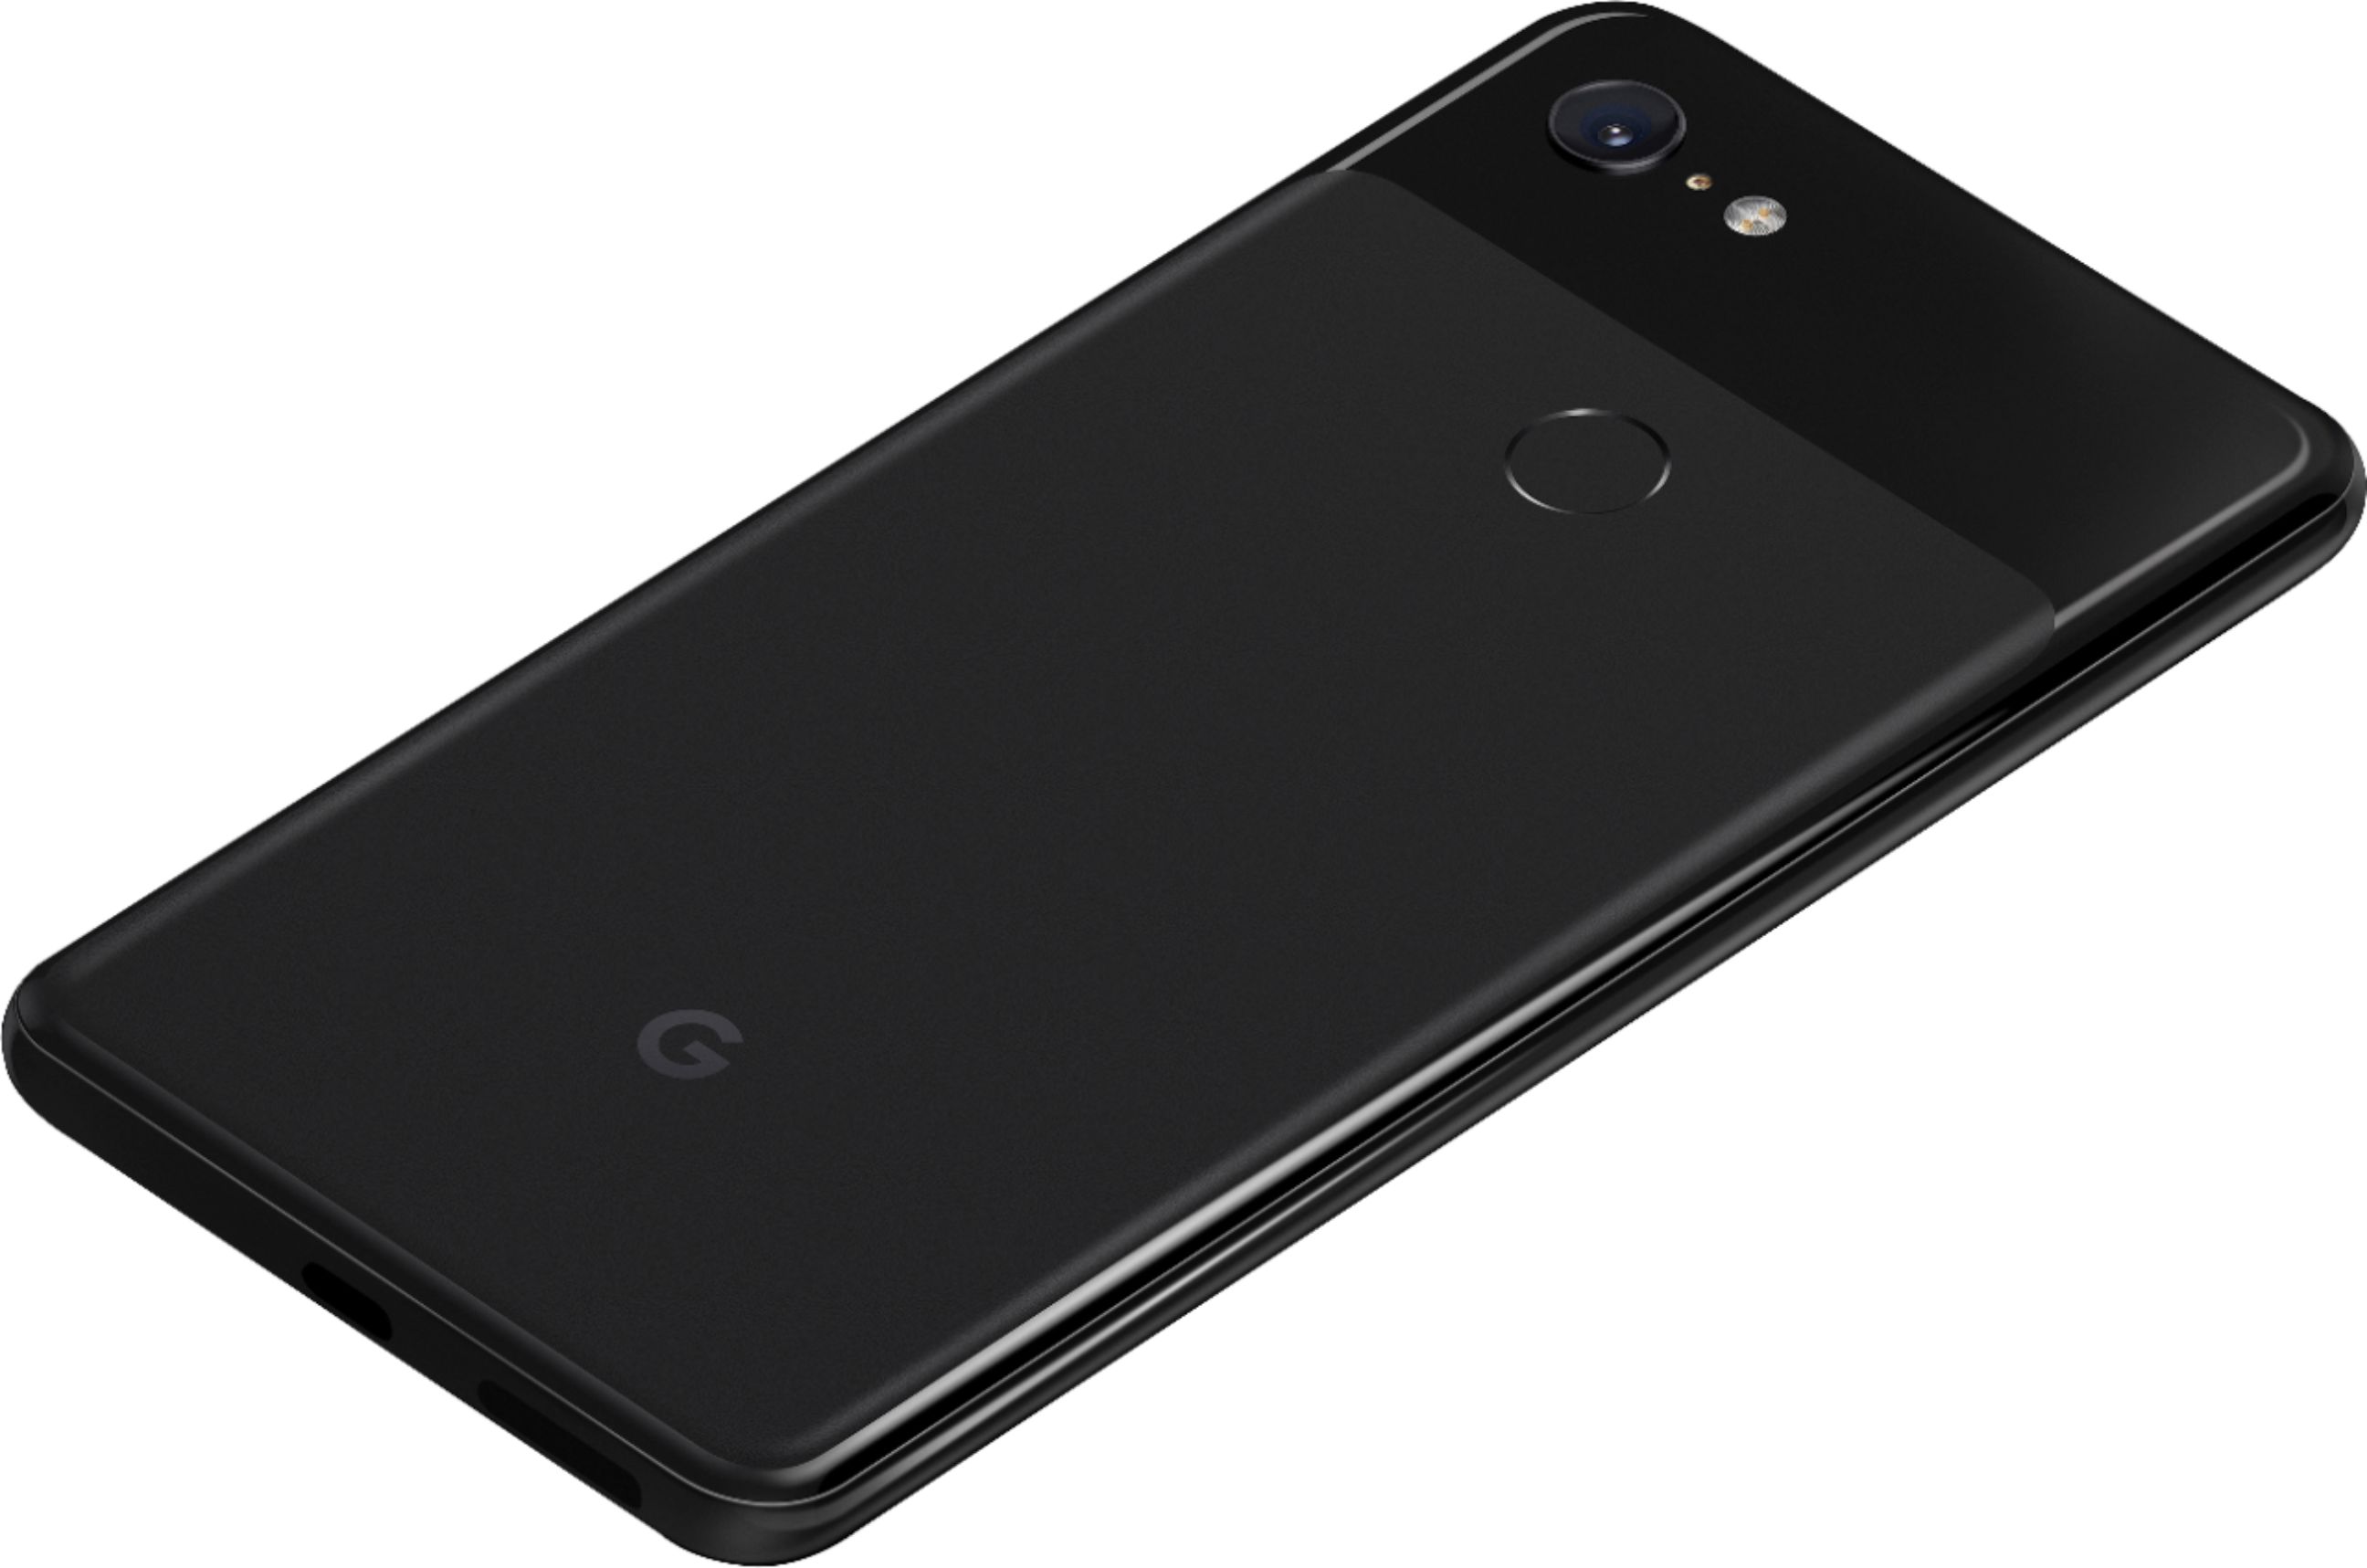 Google Pixel 3 XL 64GB Just Black for sale online Unlocked 